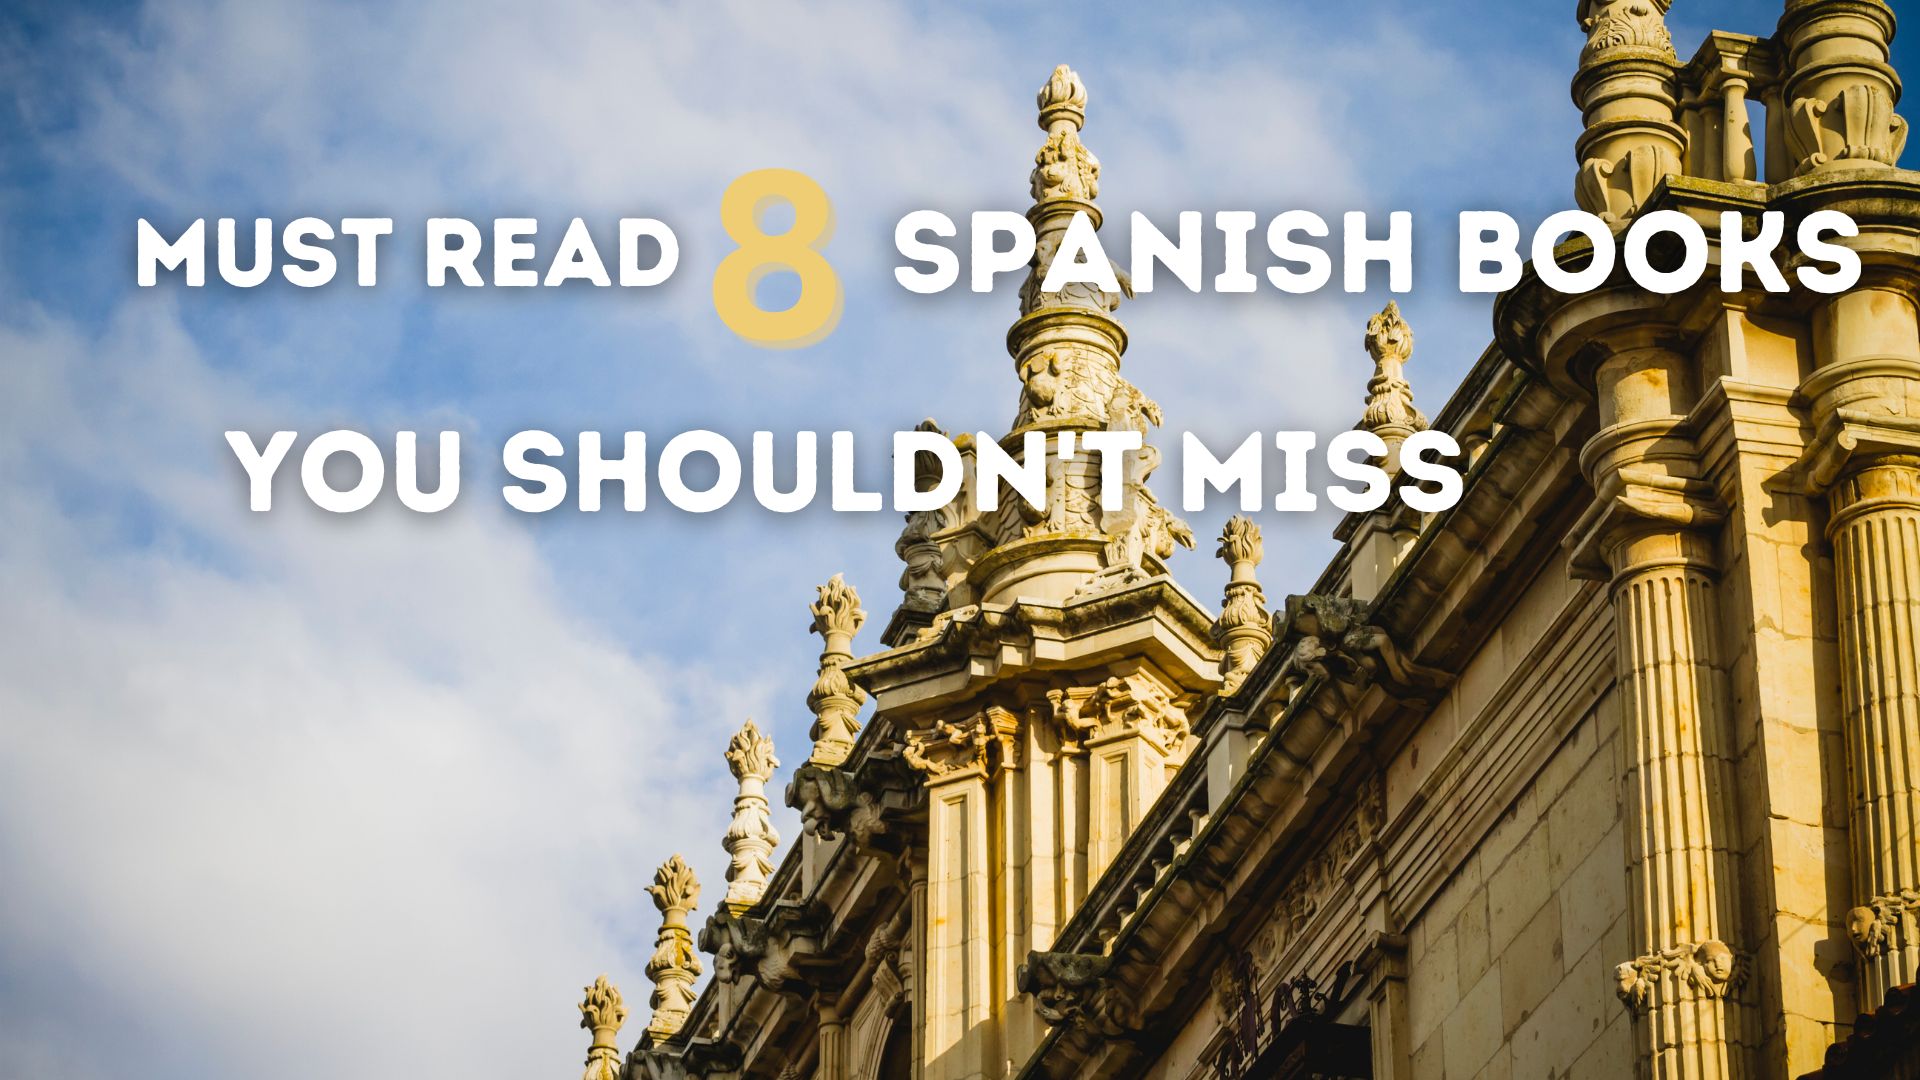 Must Read 8 Spanish Books